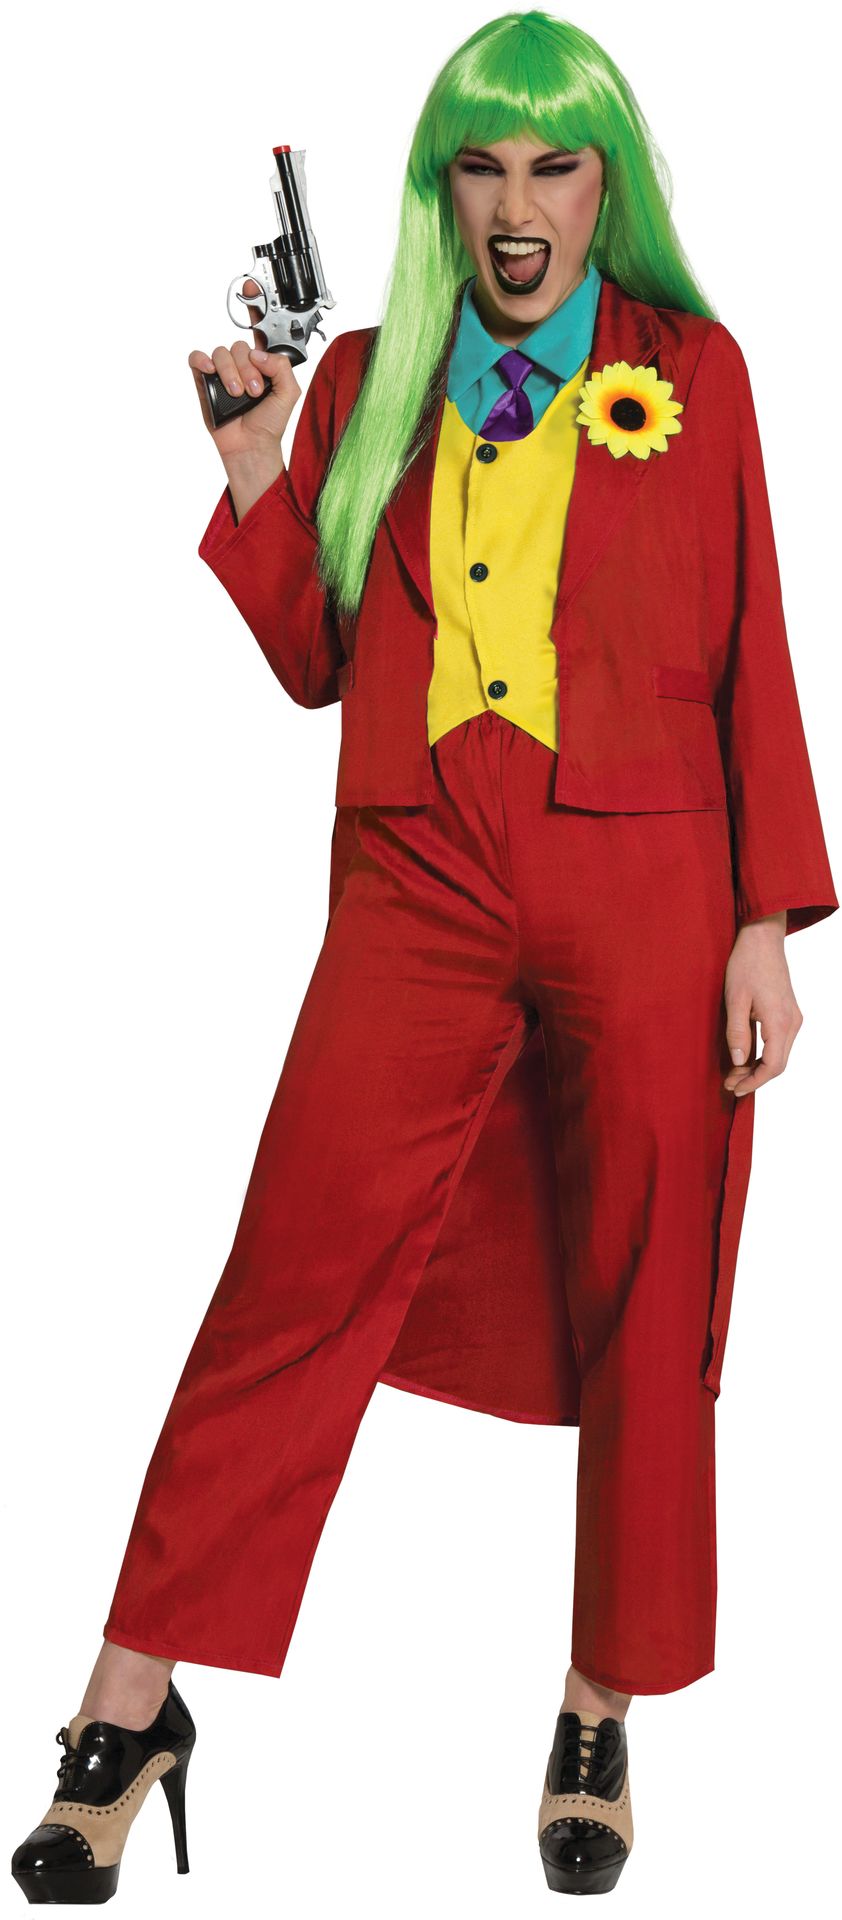 The joker rood kostuum vrouw